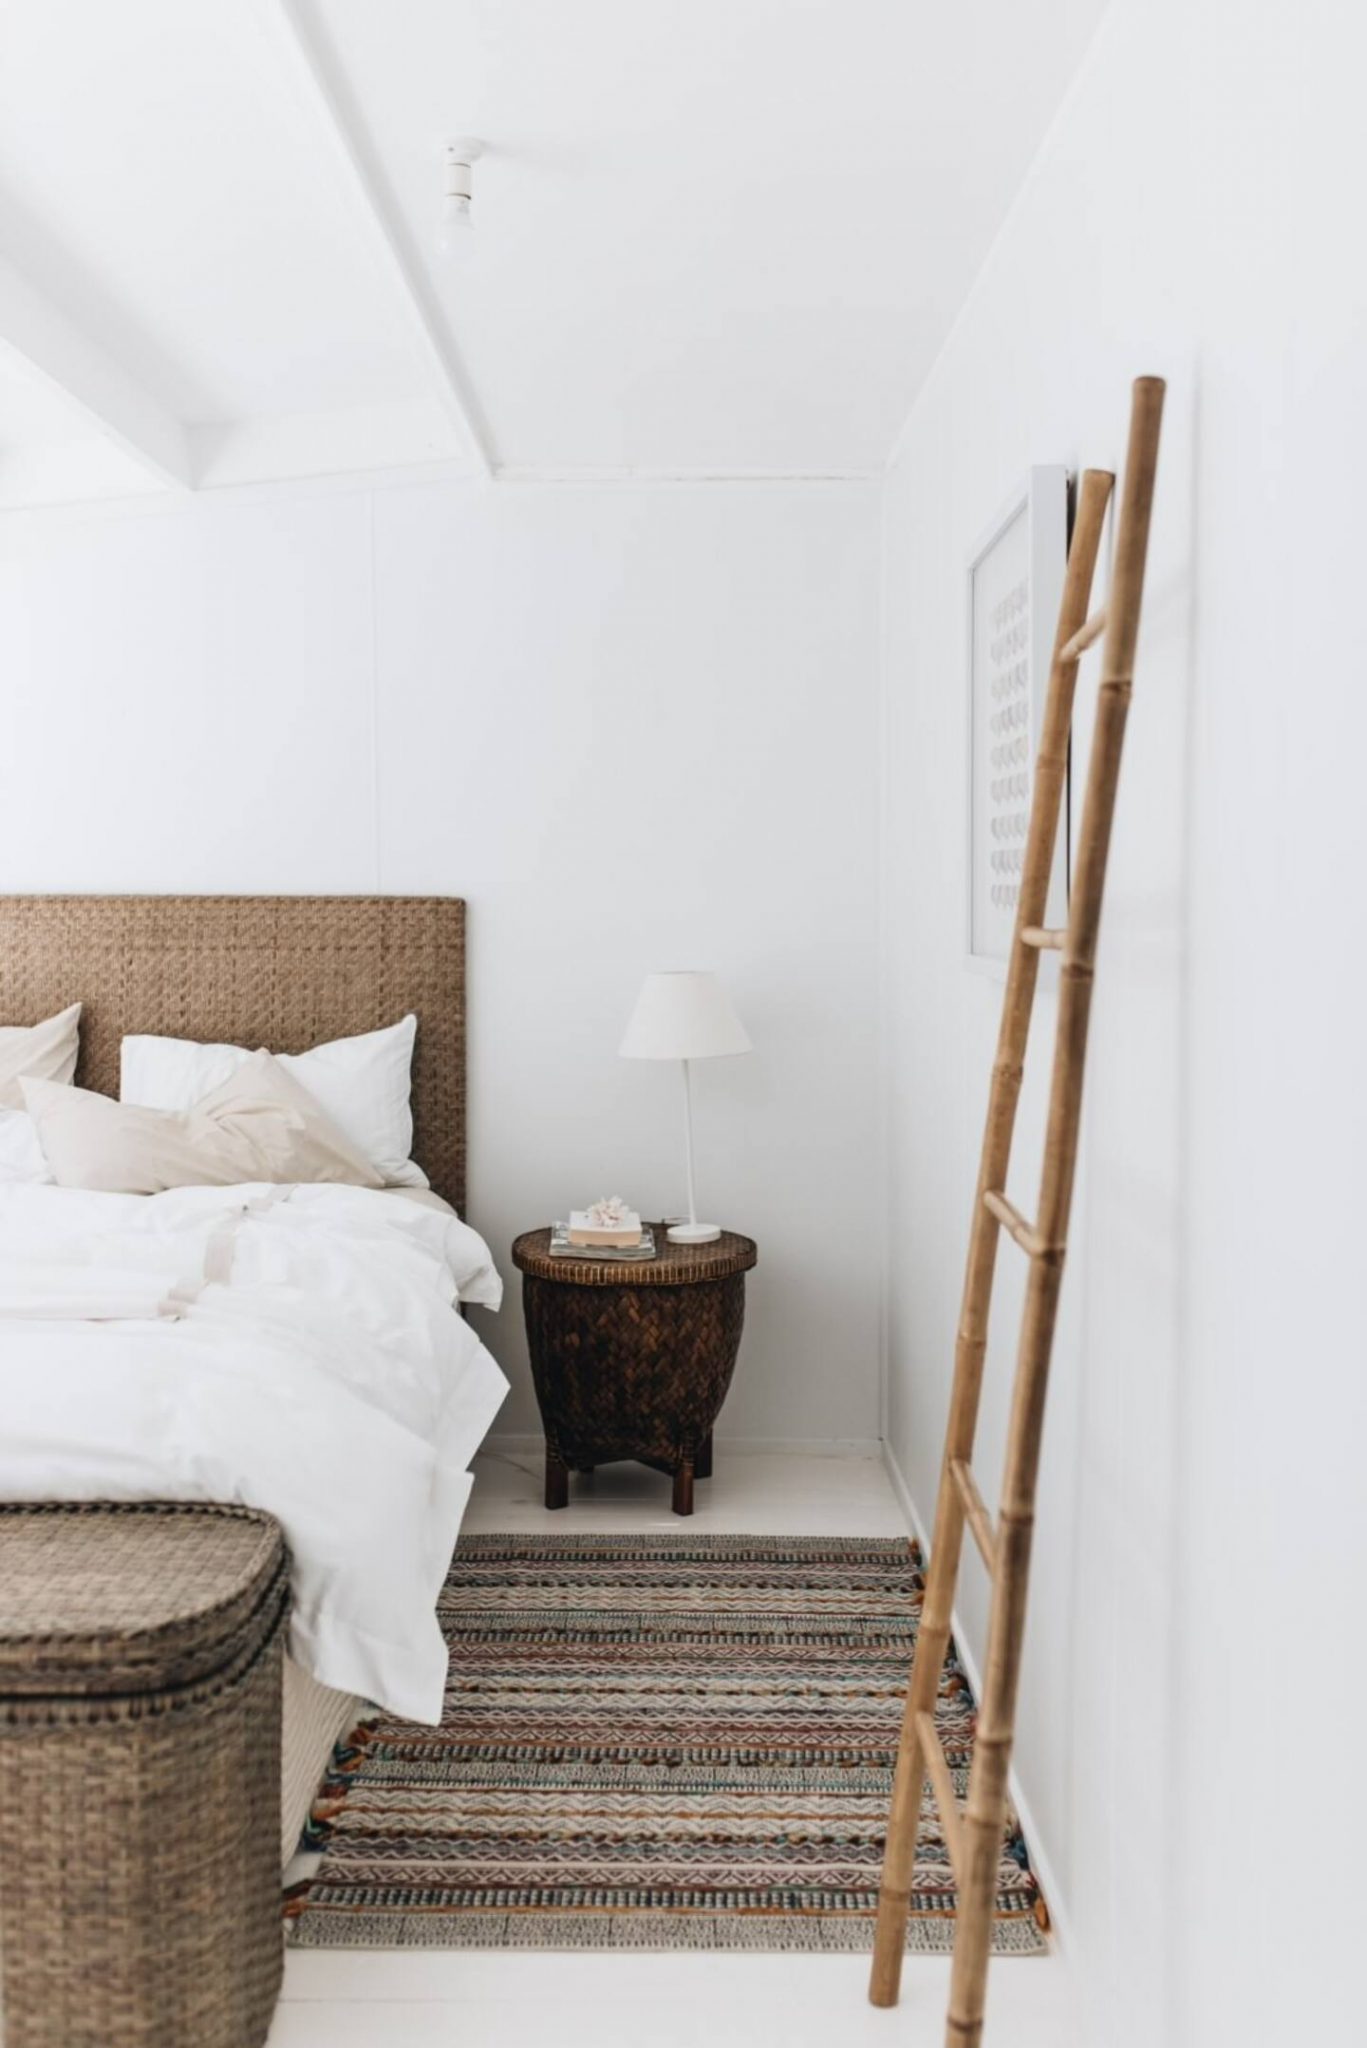 Bedroom white and natural decor beach house australia